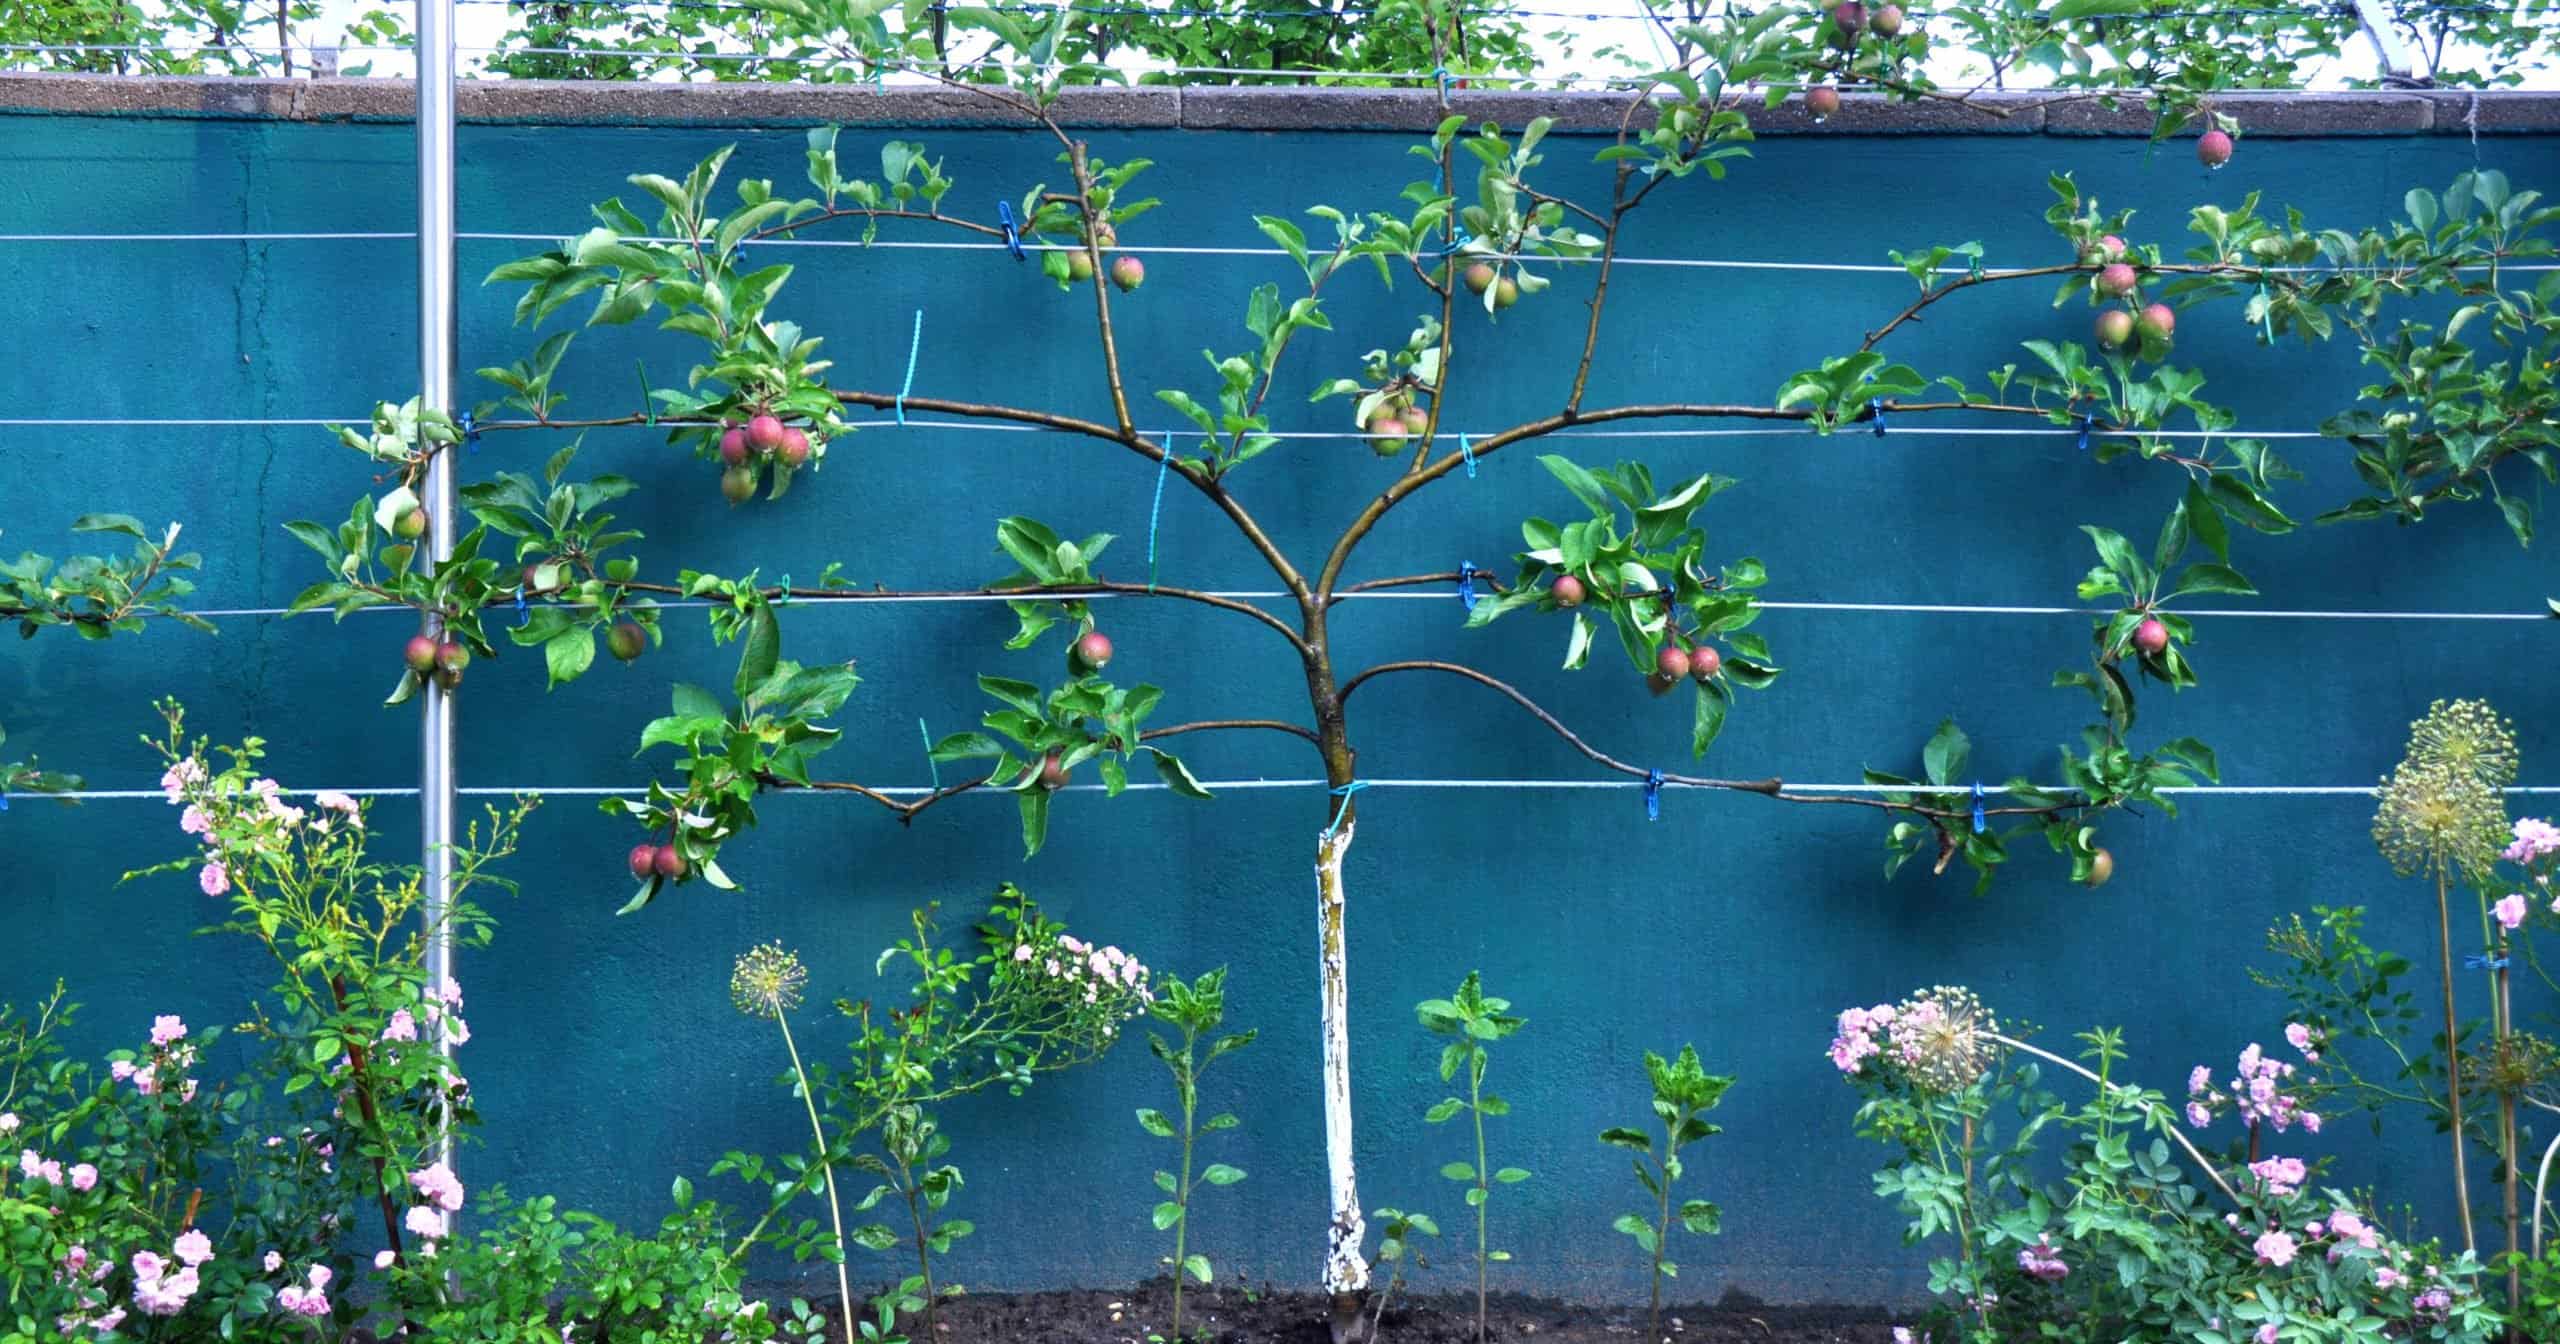 Espalier shaped apple tree pruned along a fence